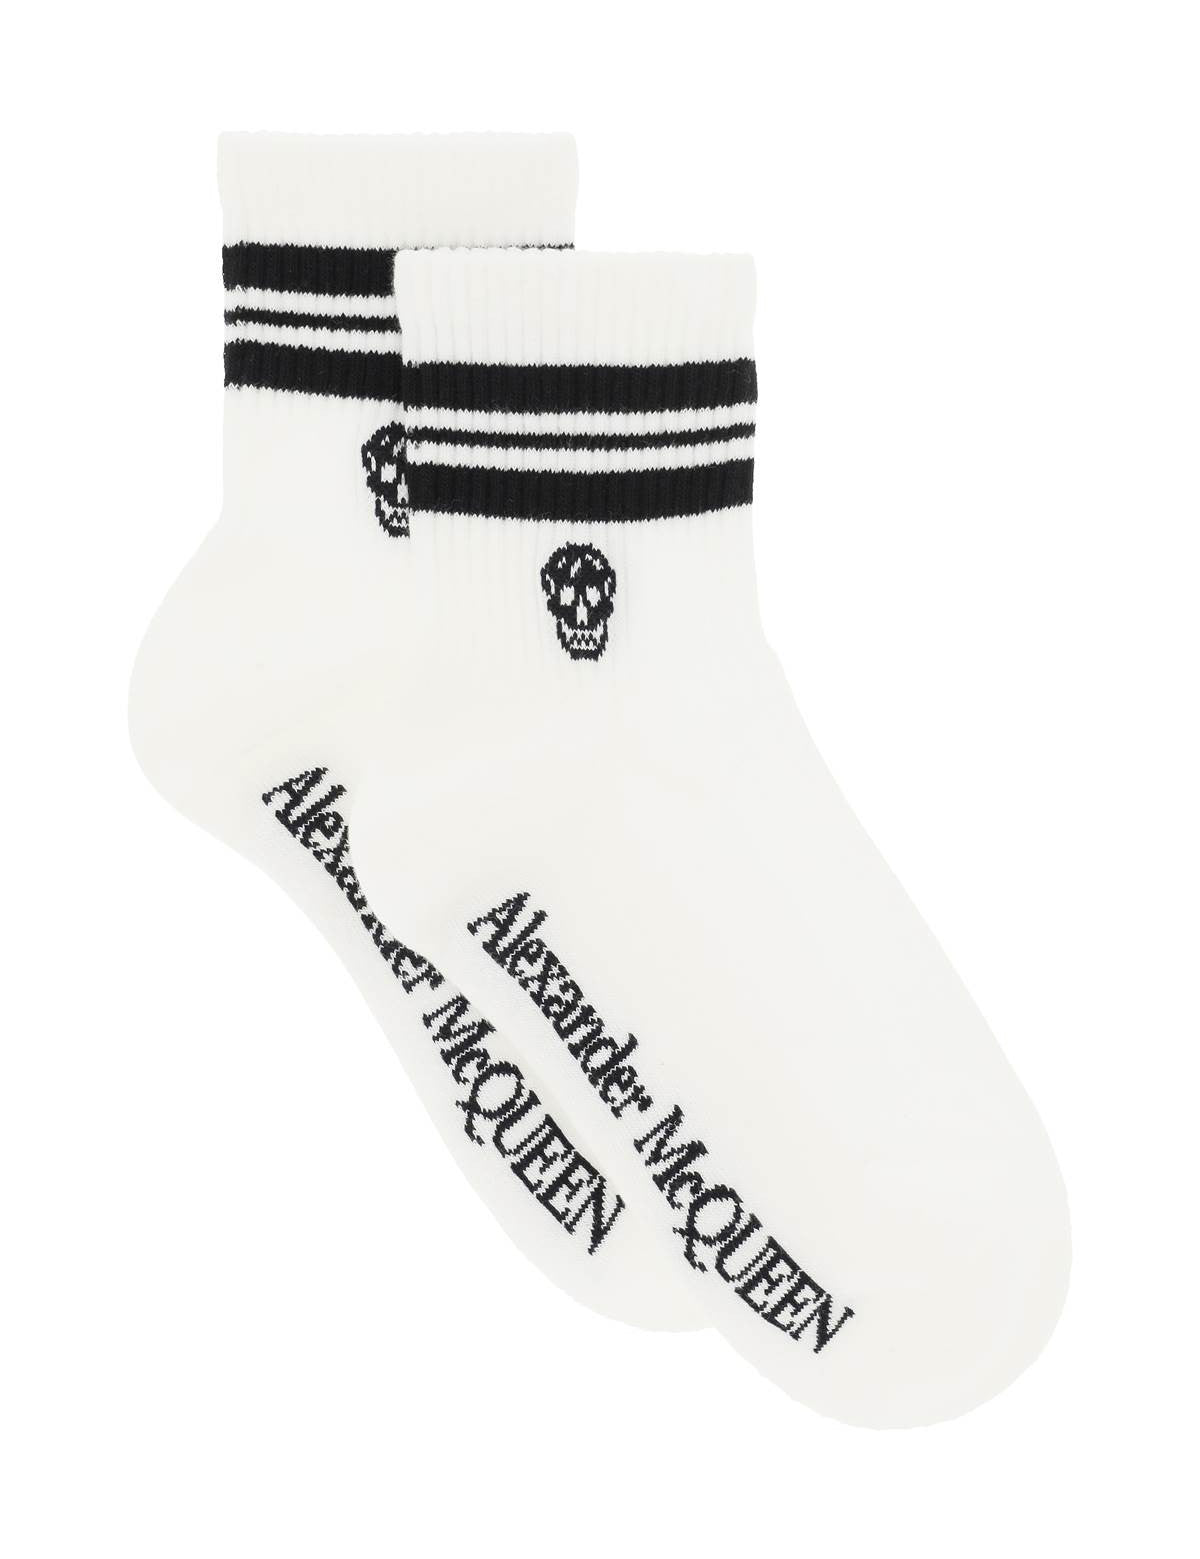 alexander-mcqueen-stripe-skull-sports-socks_9e909958-c6a3-4211-b0d7-857bb21e7f5f.jpg